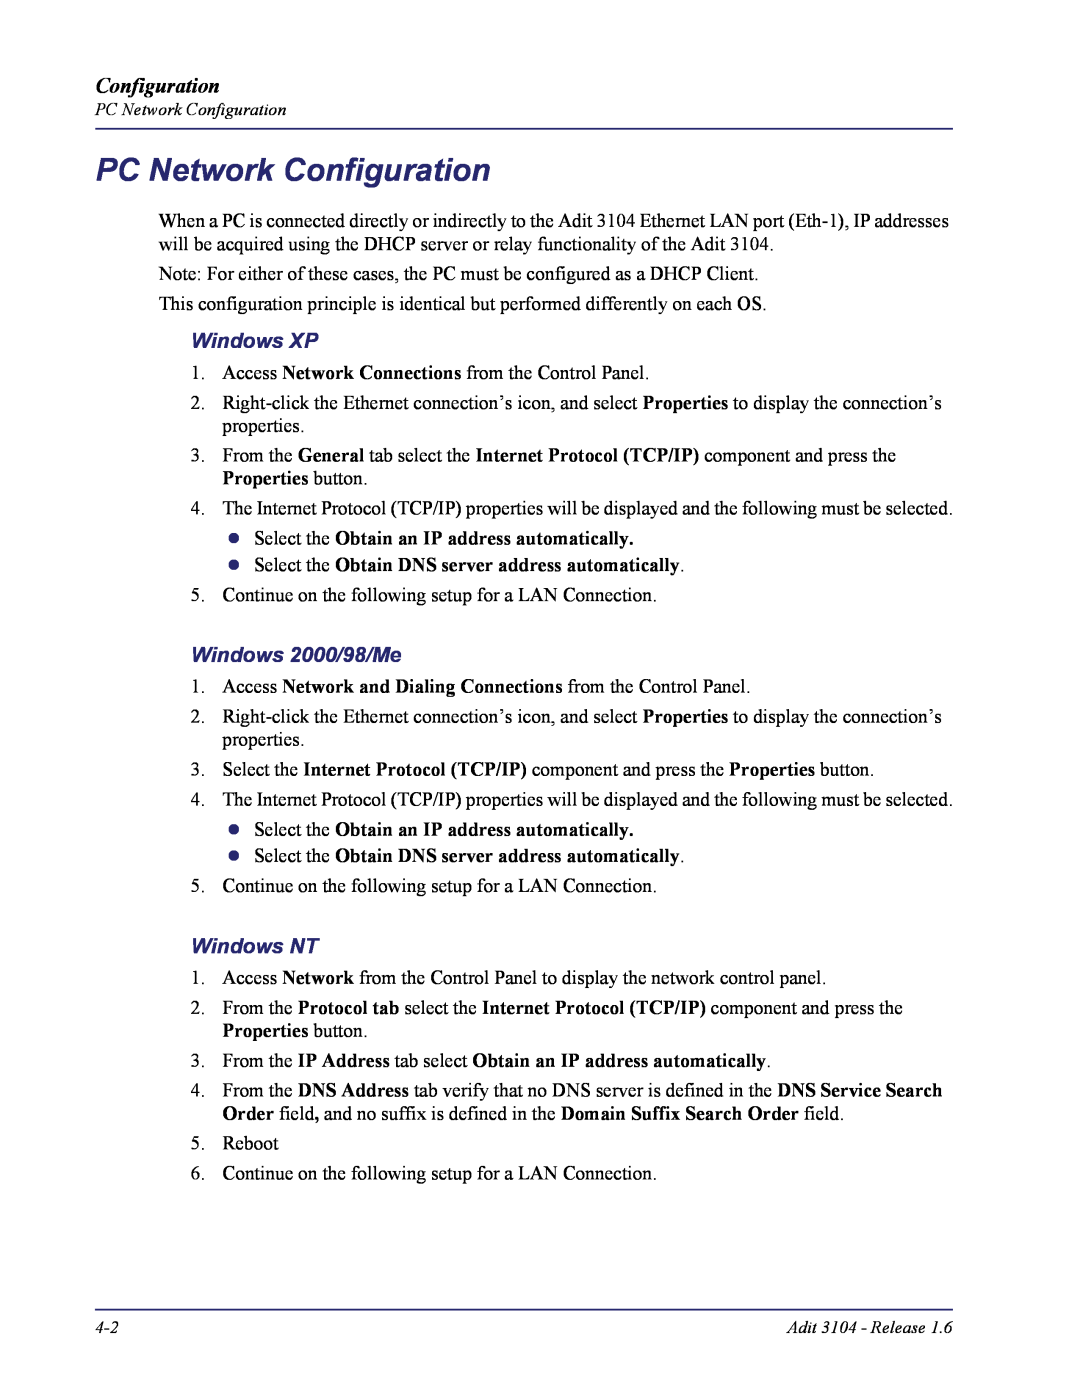 Carrier Access Adit 3104 user manual PC Network Configuration, Windows XP, Windows 2000/98/Me, Windows NT 